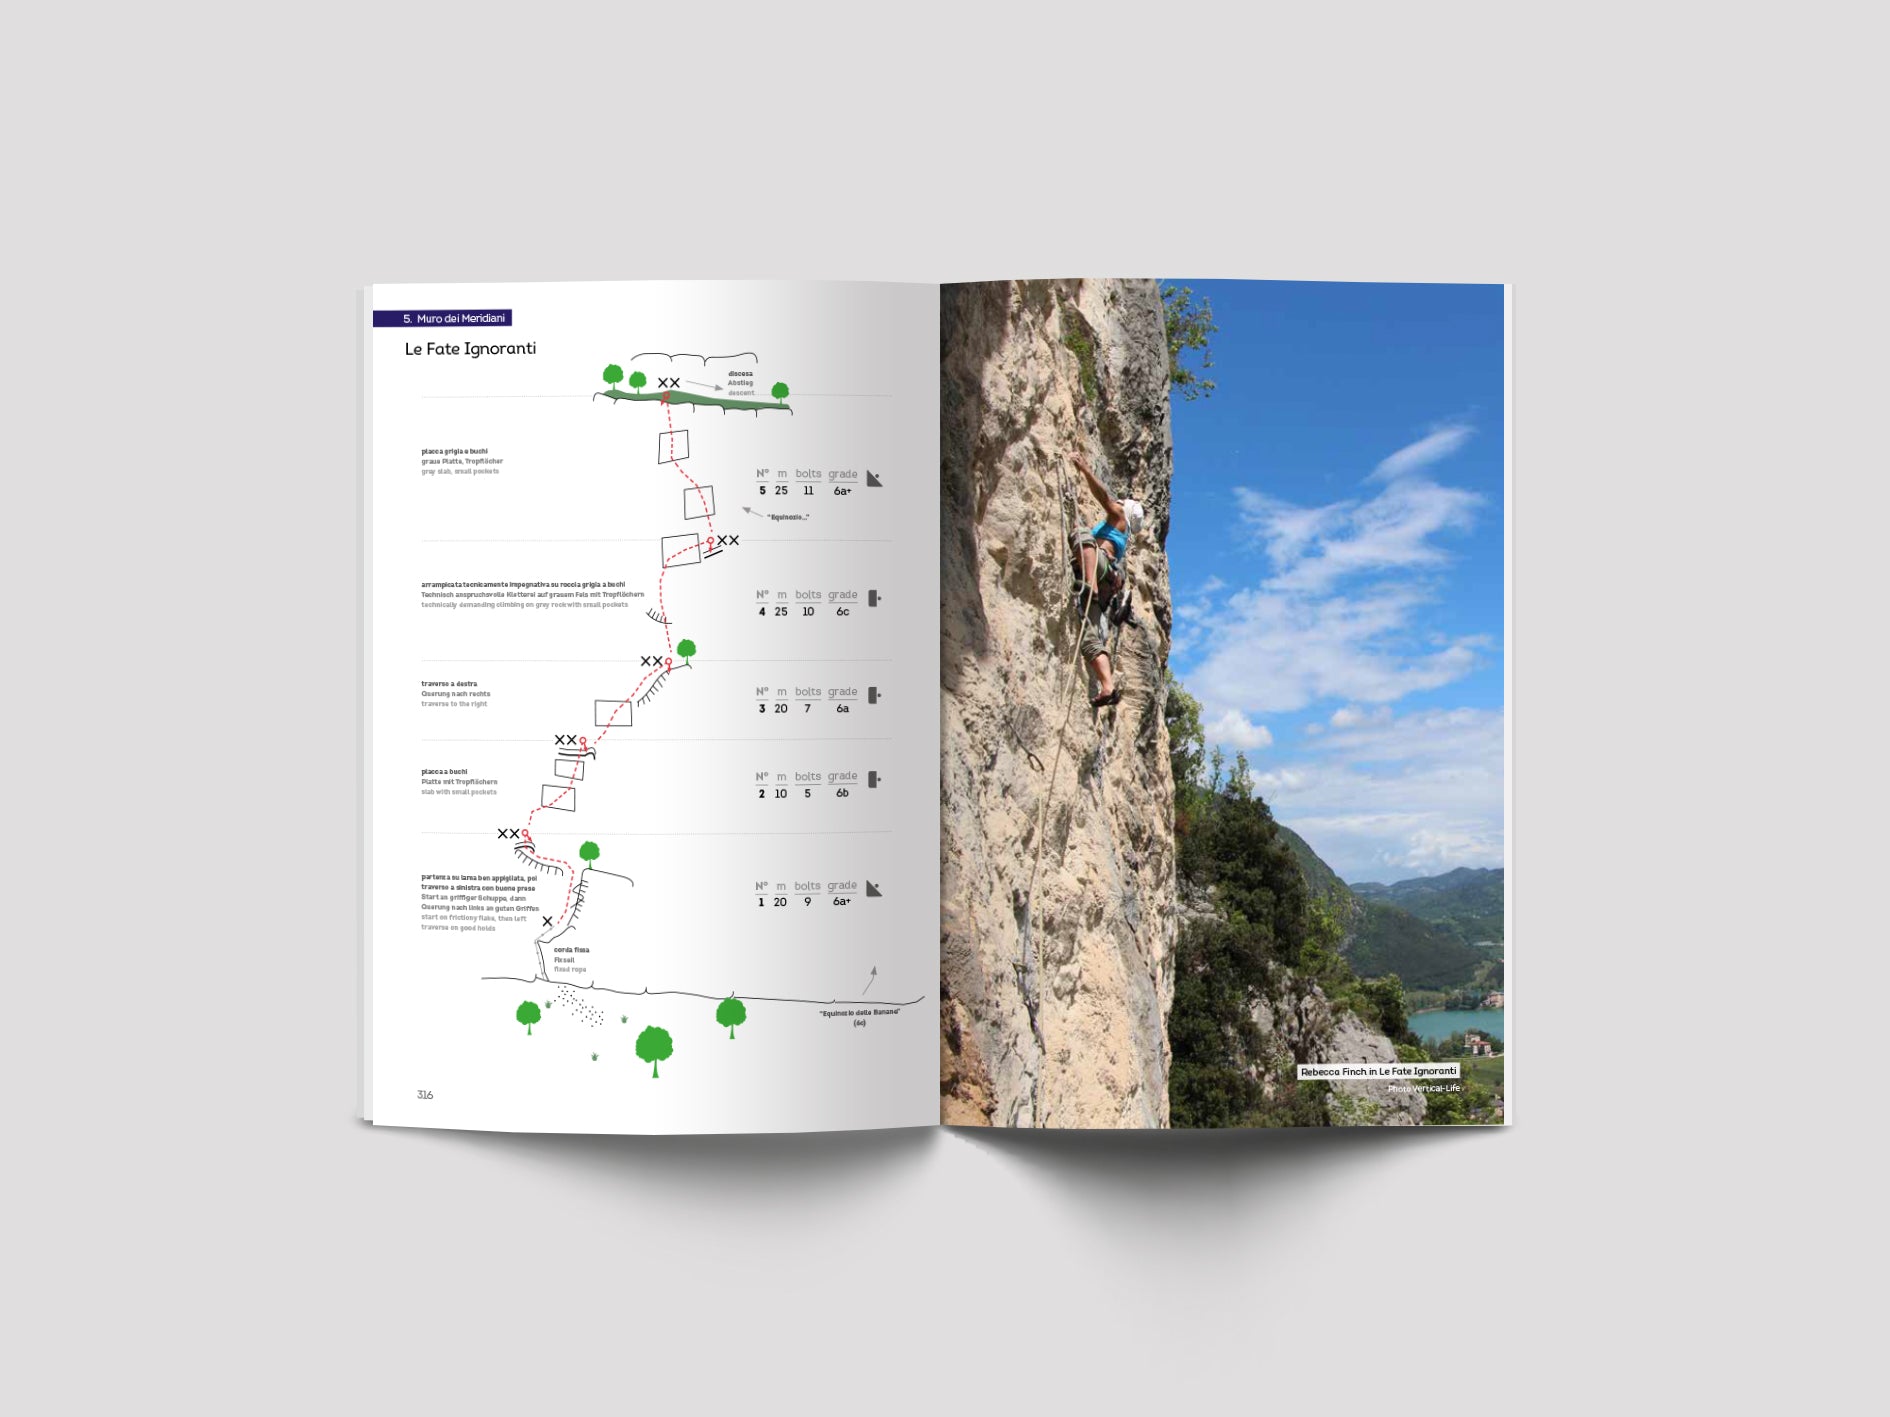 Arco Multi-Pitch Climbing (2017), multi-pitch klimgids